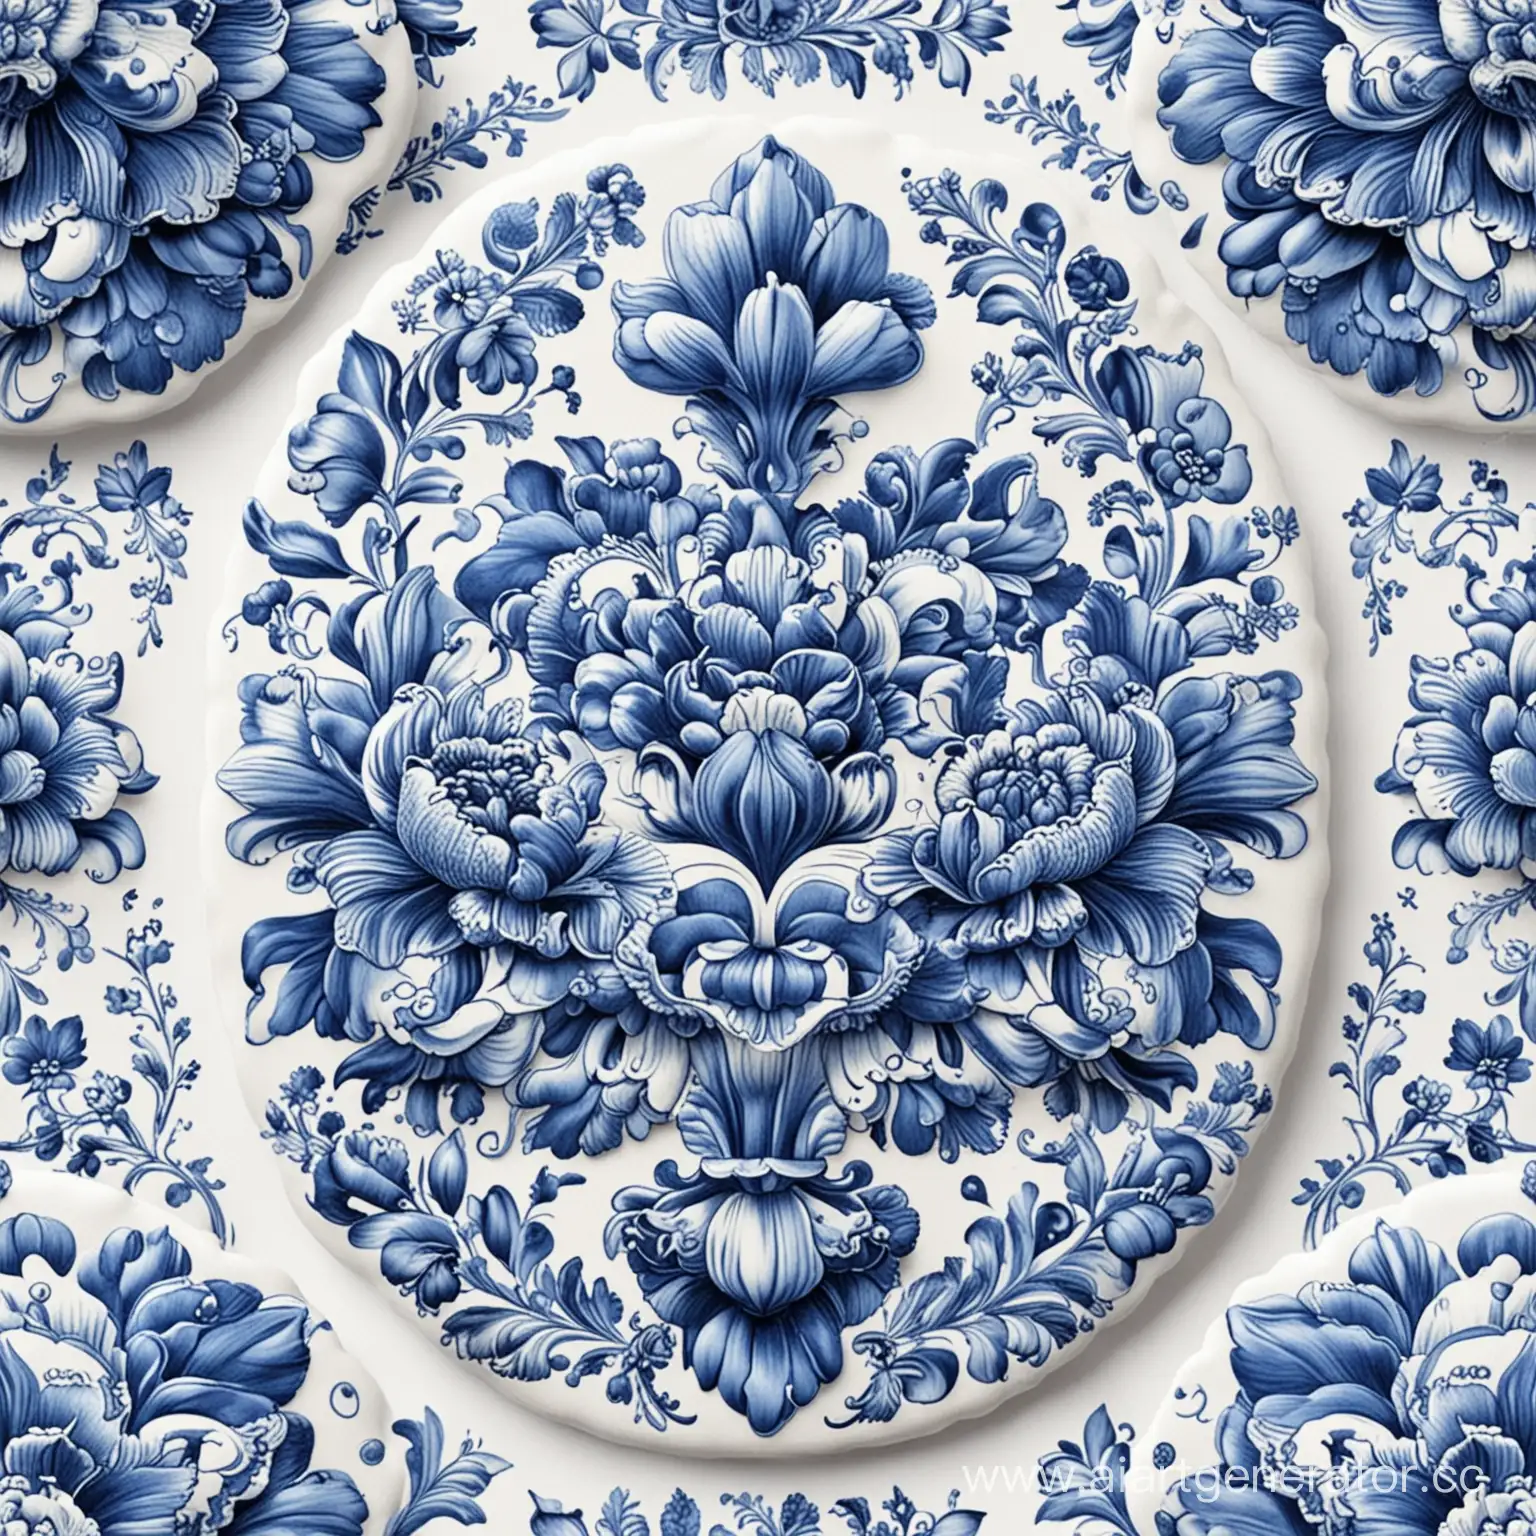 Traditional-Gzhel-Ceramic-Patterns-on-Bright-White-Background